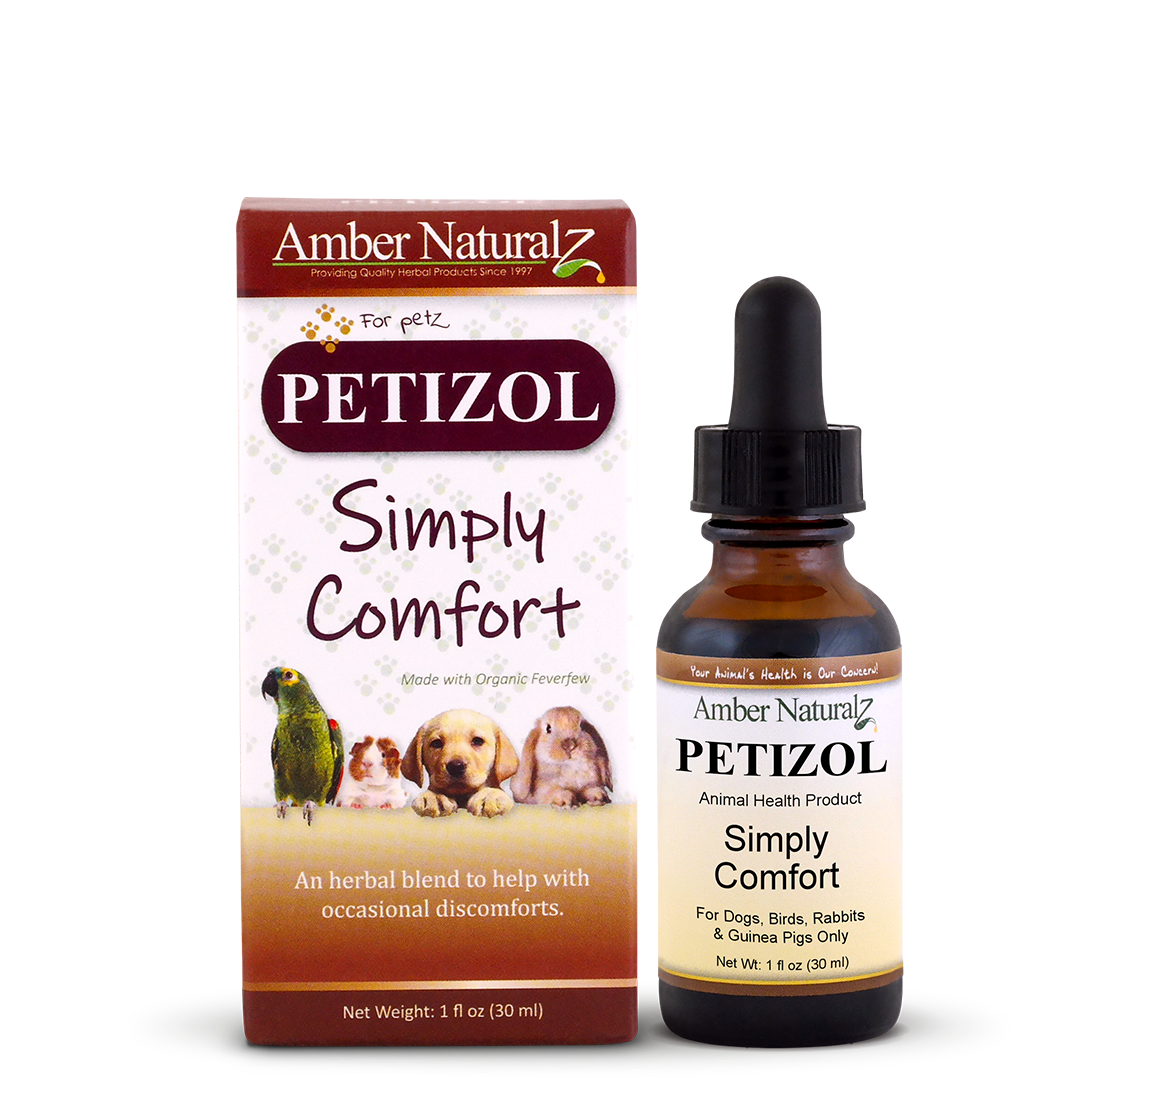 Amber NaturalZ Petizol Pet Supplement